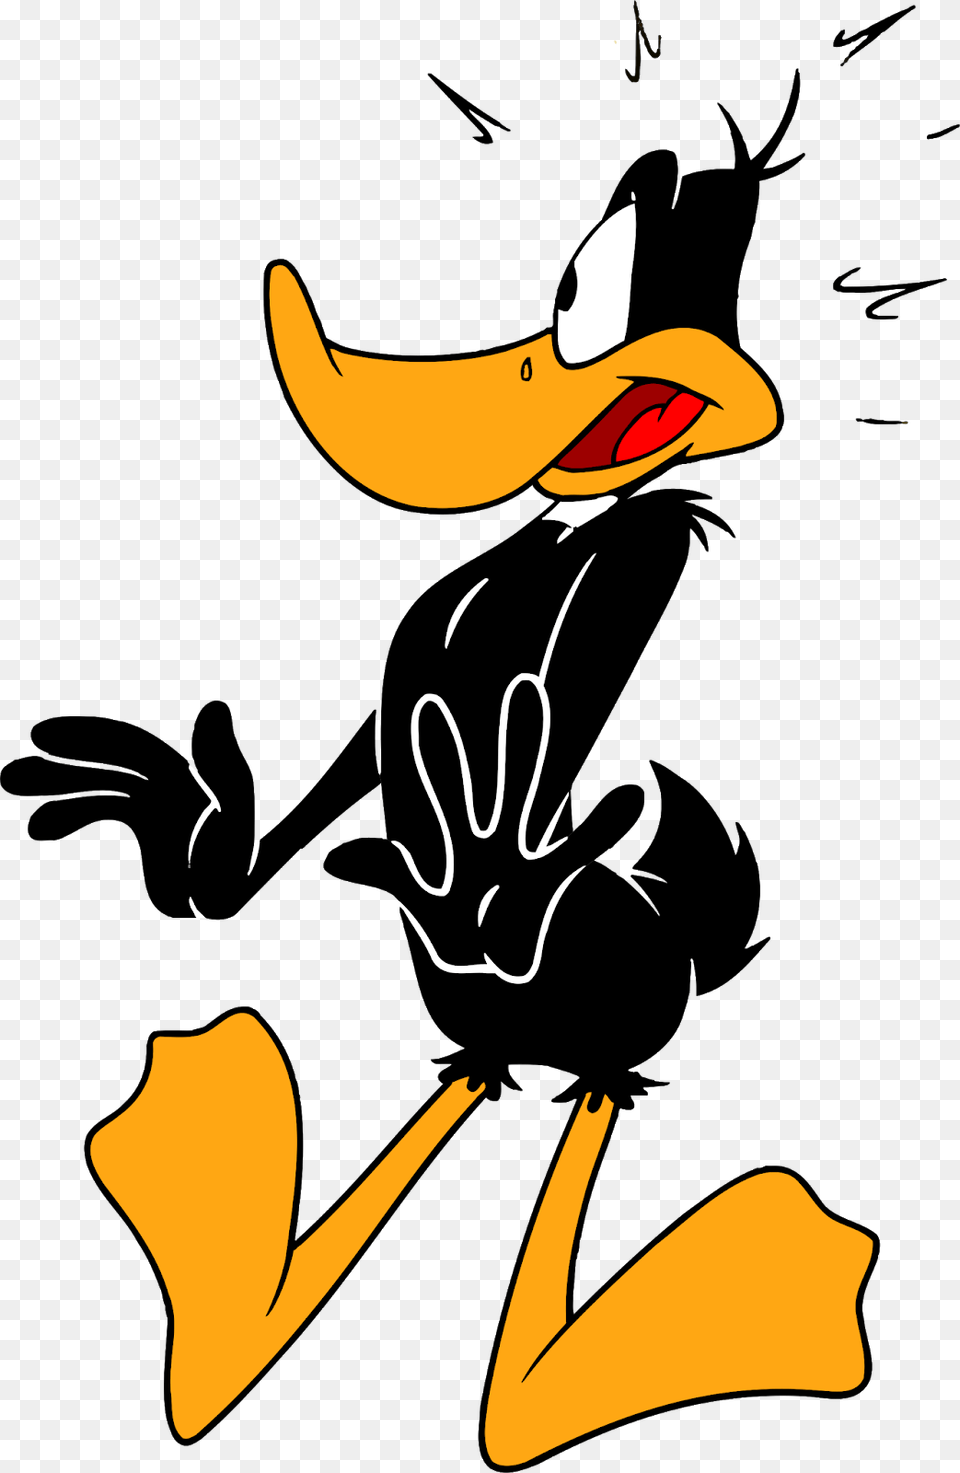 Daffy Duck Cartoon Character Daffy Duck Characters Daffy Duck Pregnant, Animal, Beak, Bird, Smoke Pipe Free Png Download